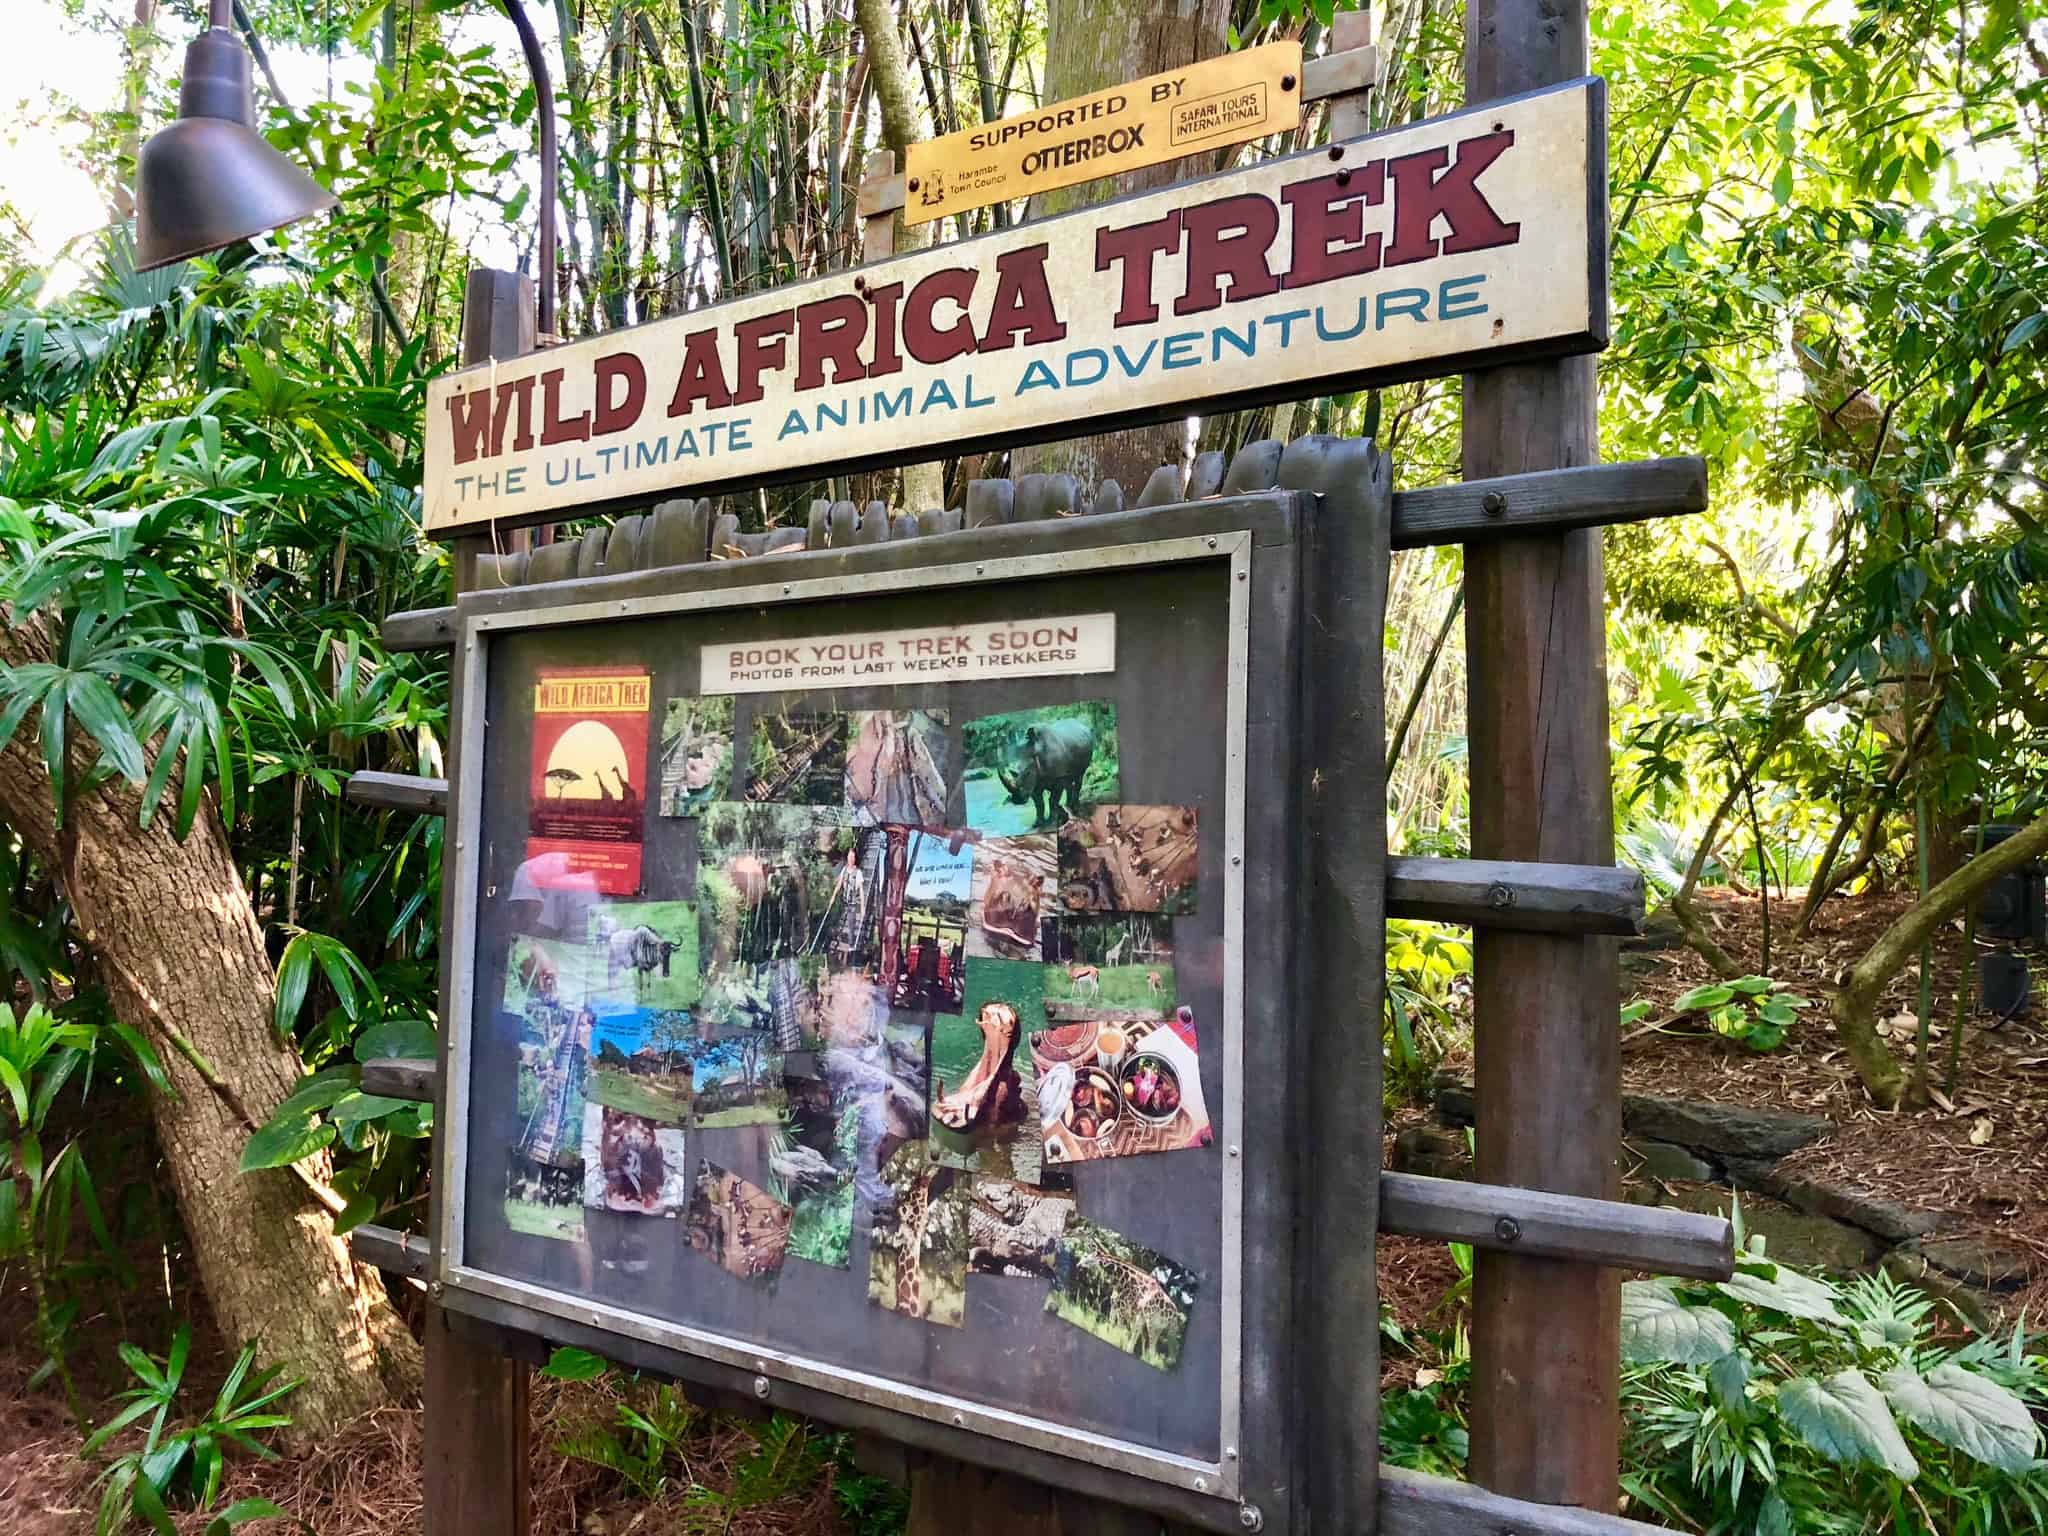 Wild Africa Trek Sign - The Ultimate Animal Adventure